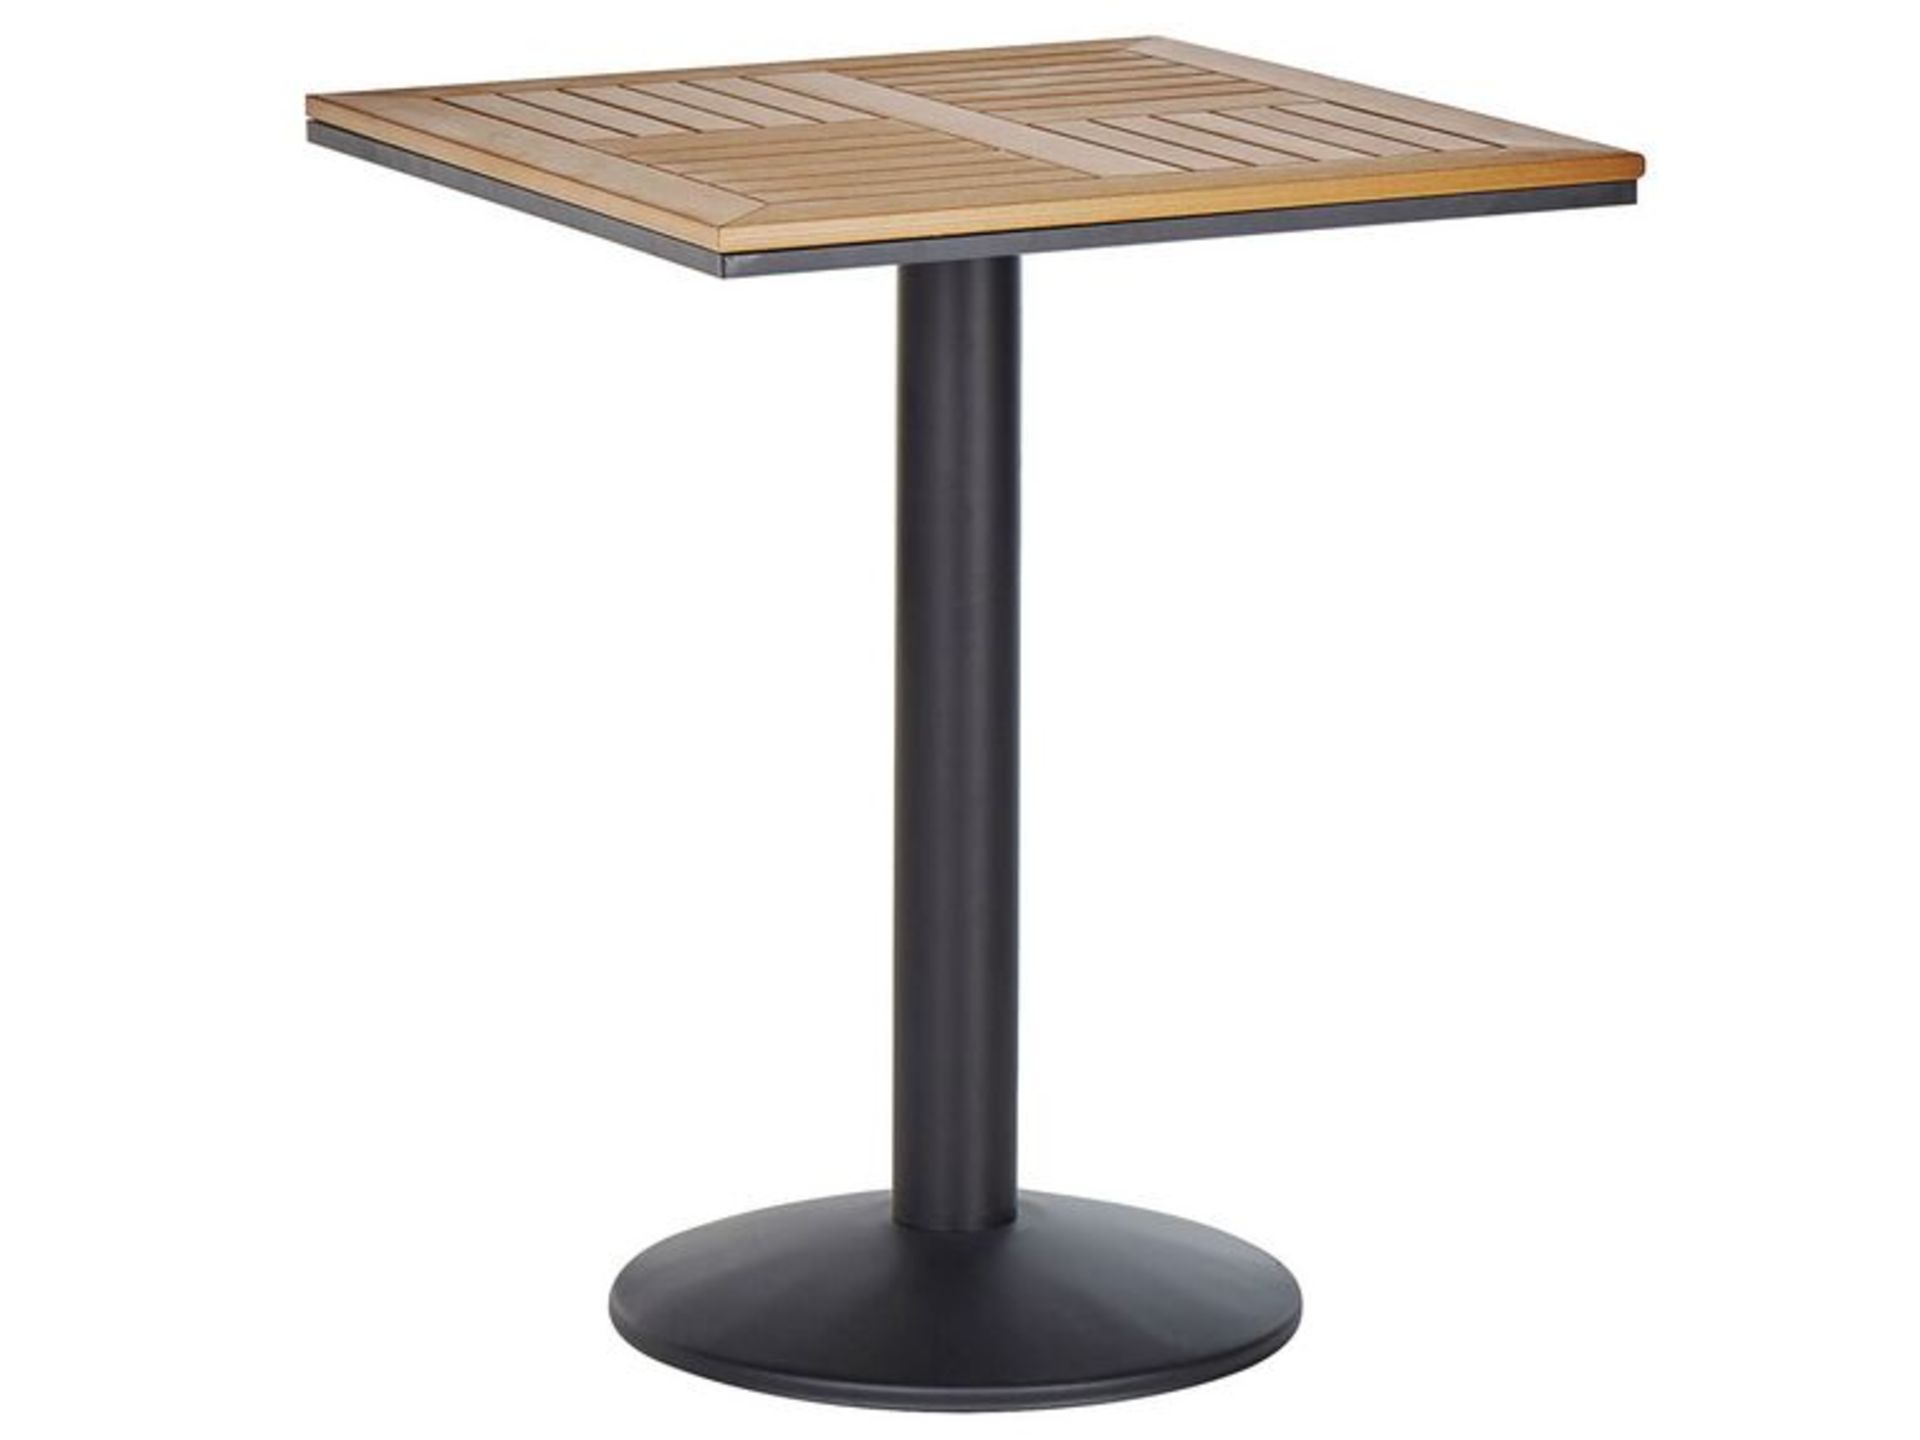 Palmi Garden Bistro Table 60 x 60 cm Light Wood.- SR6U. RRP £129.99. Create an inviting lounge